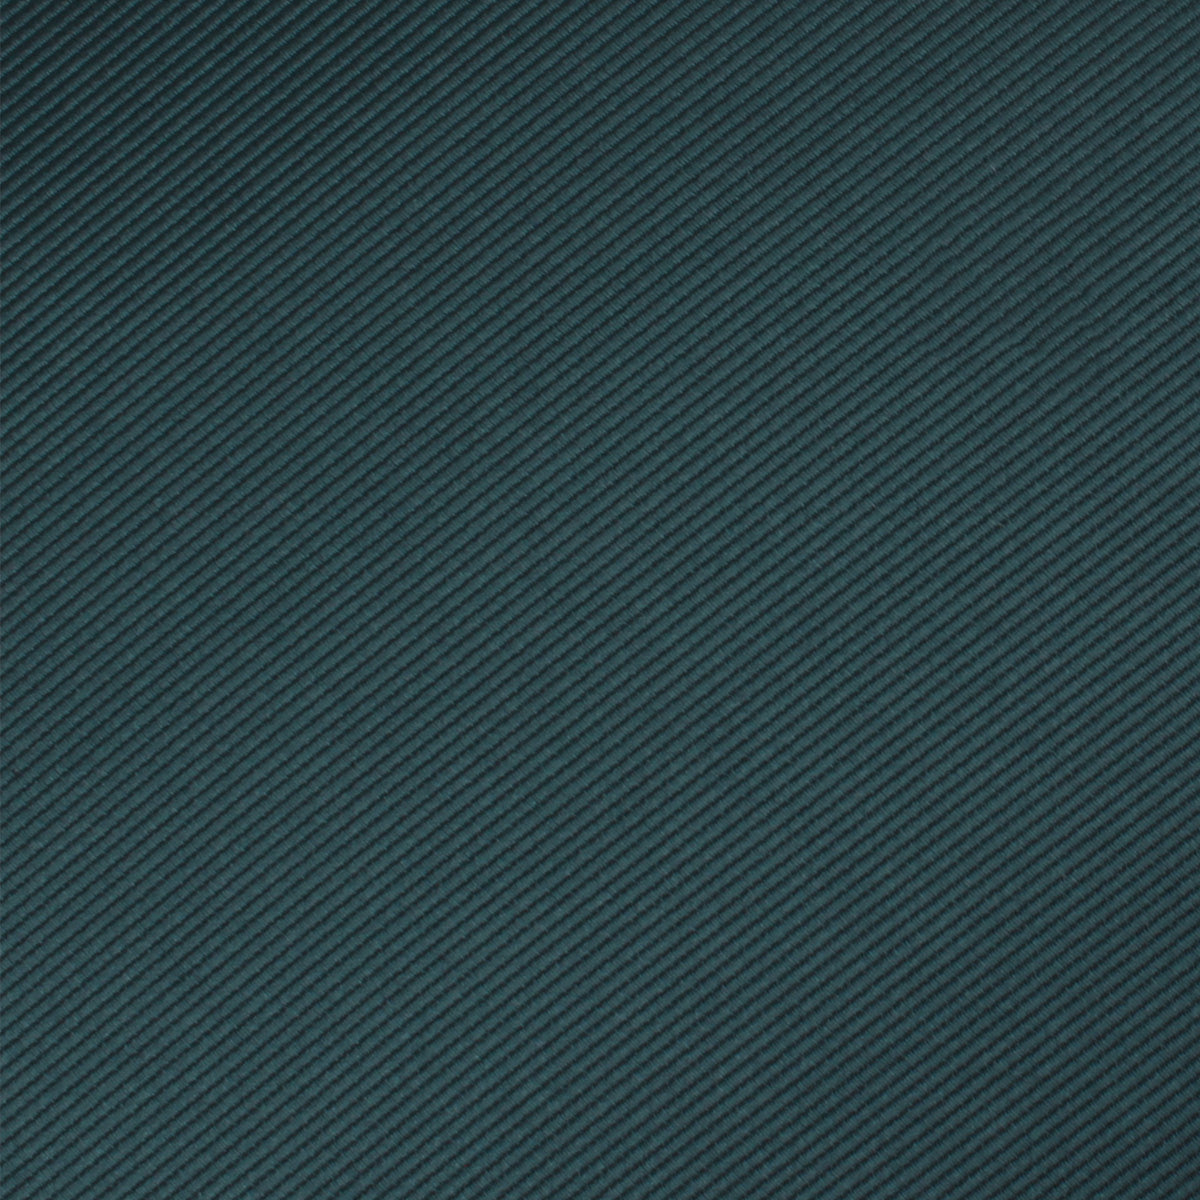 Juniper Dark Green Twill Pocket Square Fabric